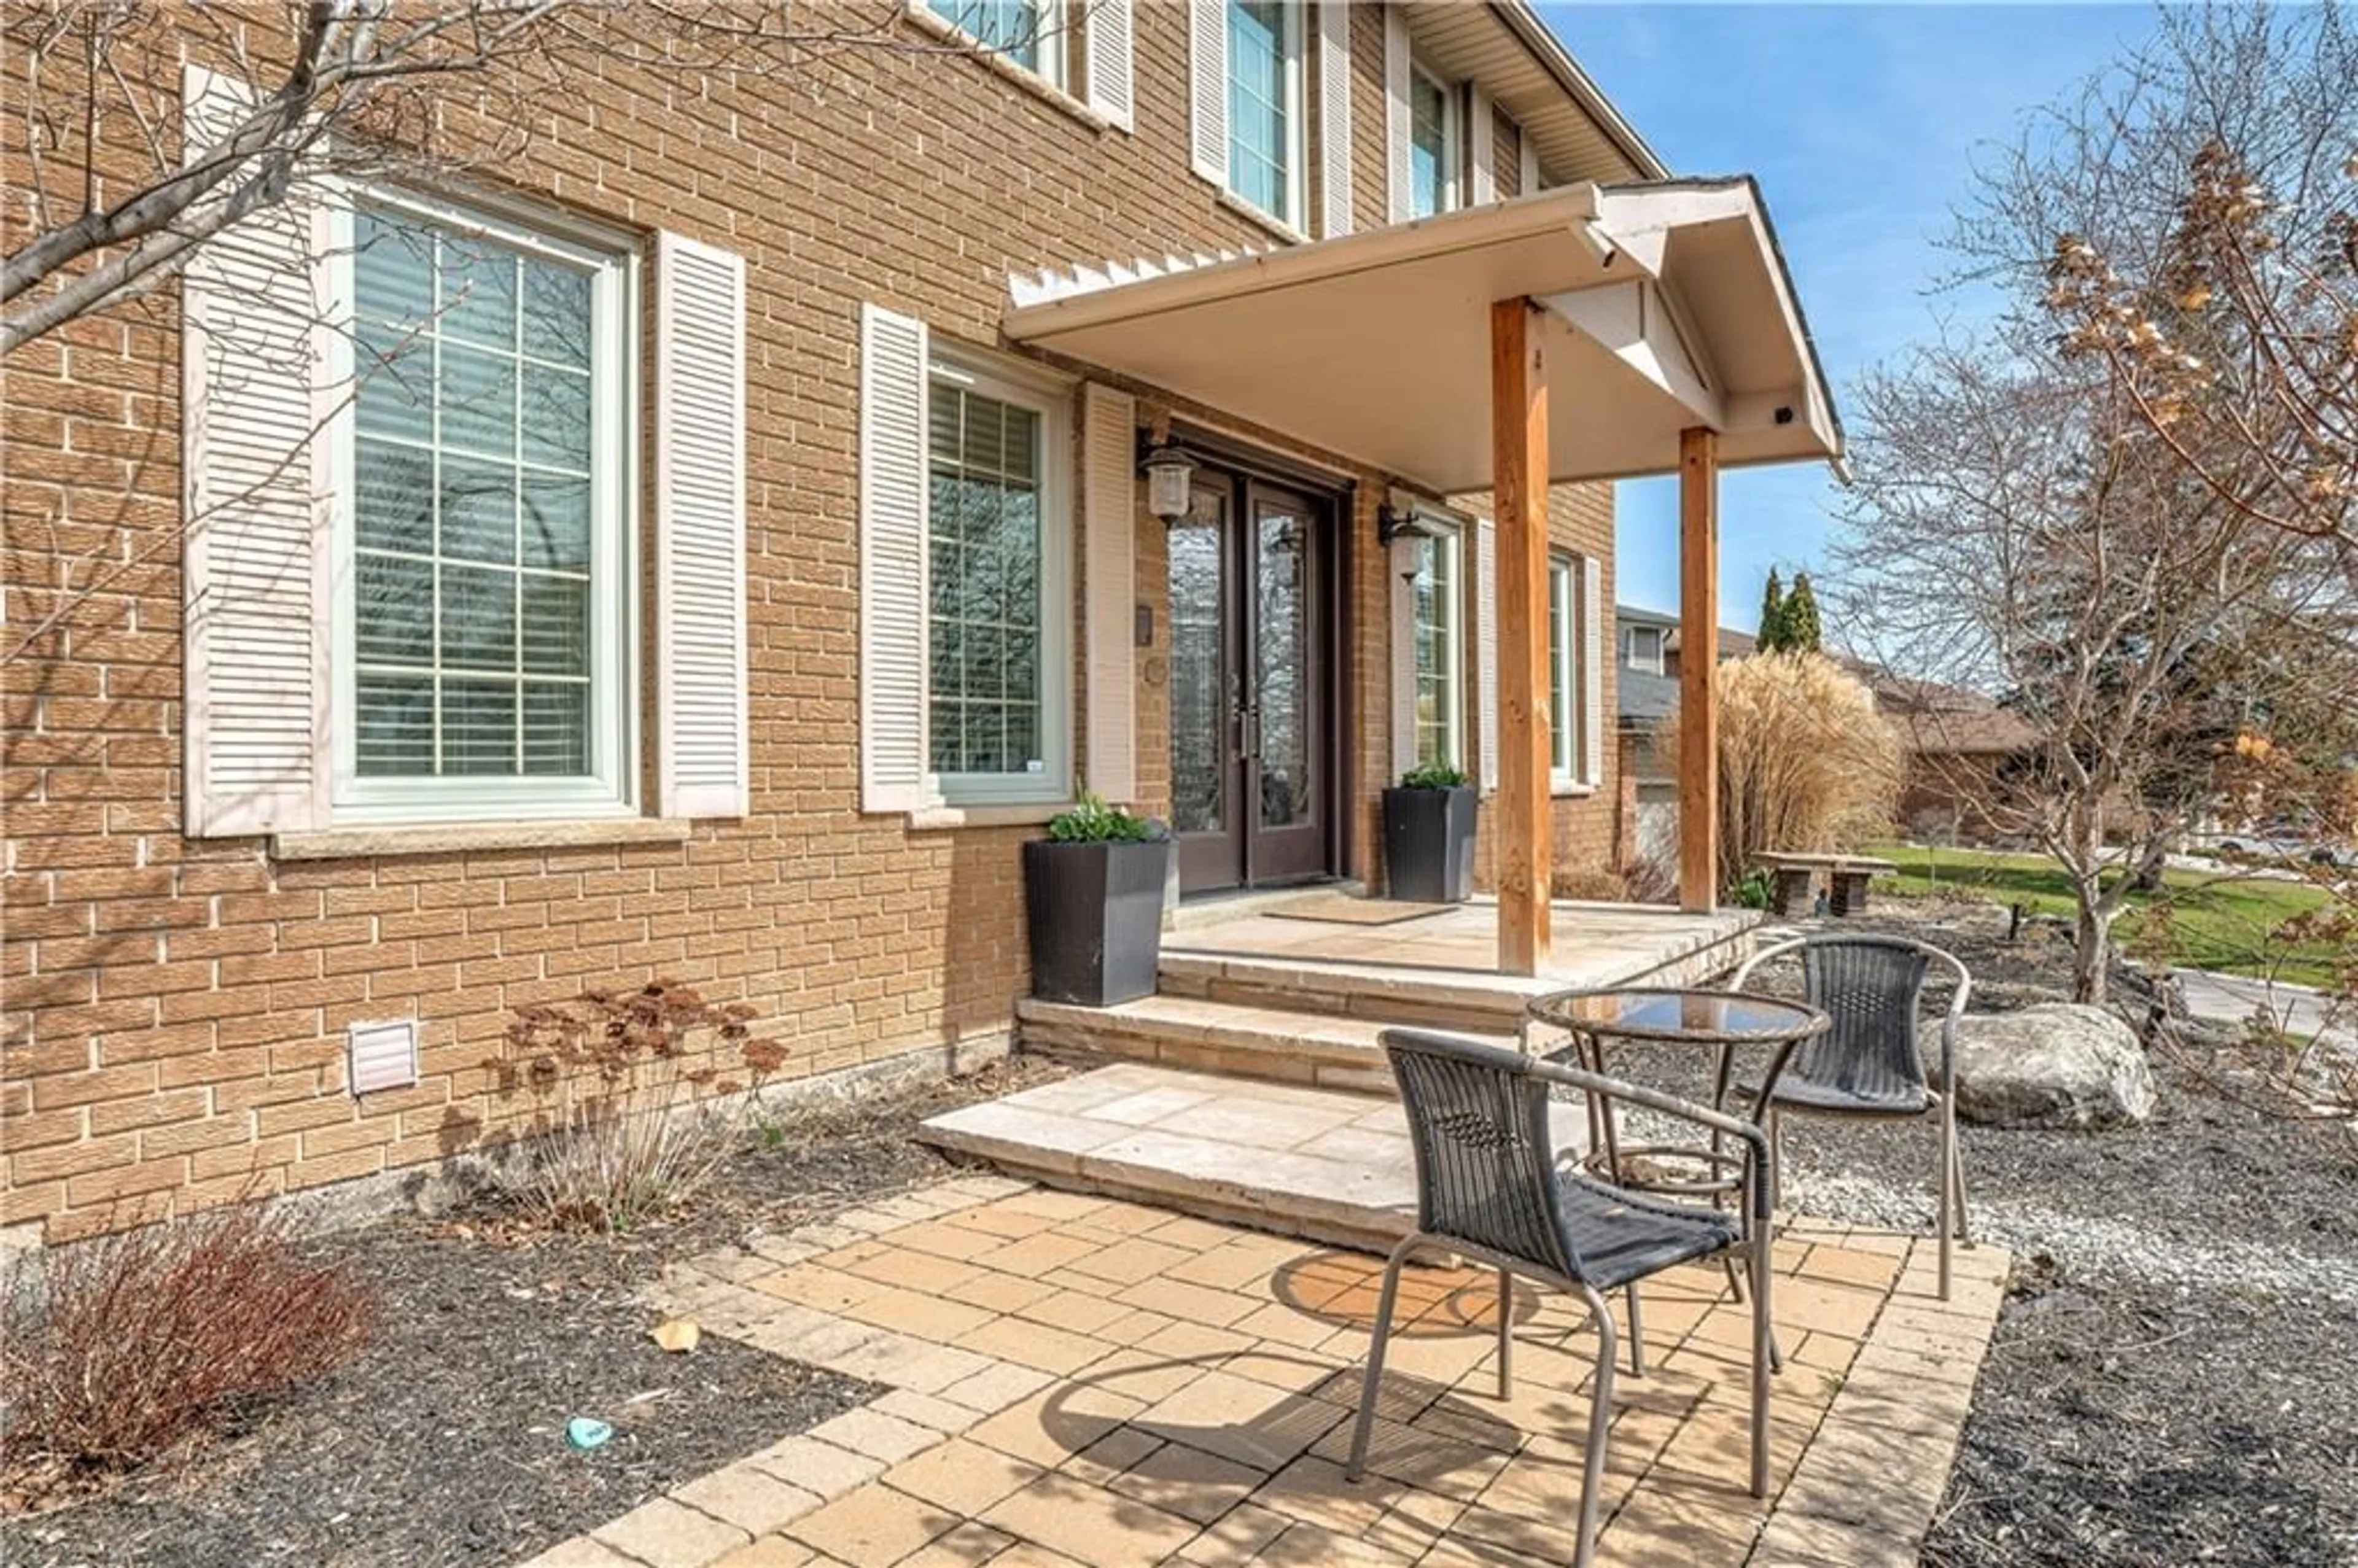 Home with brick exterior material for 1157 Havendale Blvd, Burlington Ontario L7P 3K6